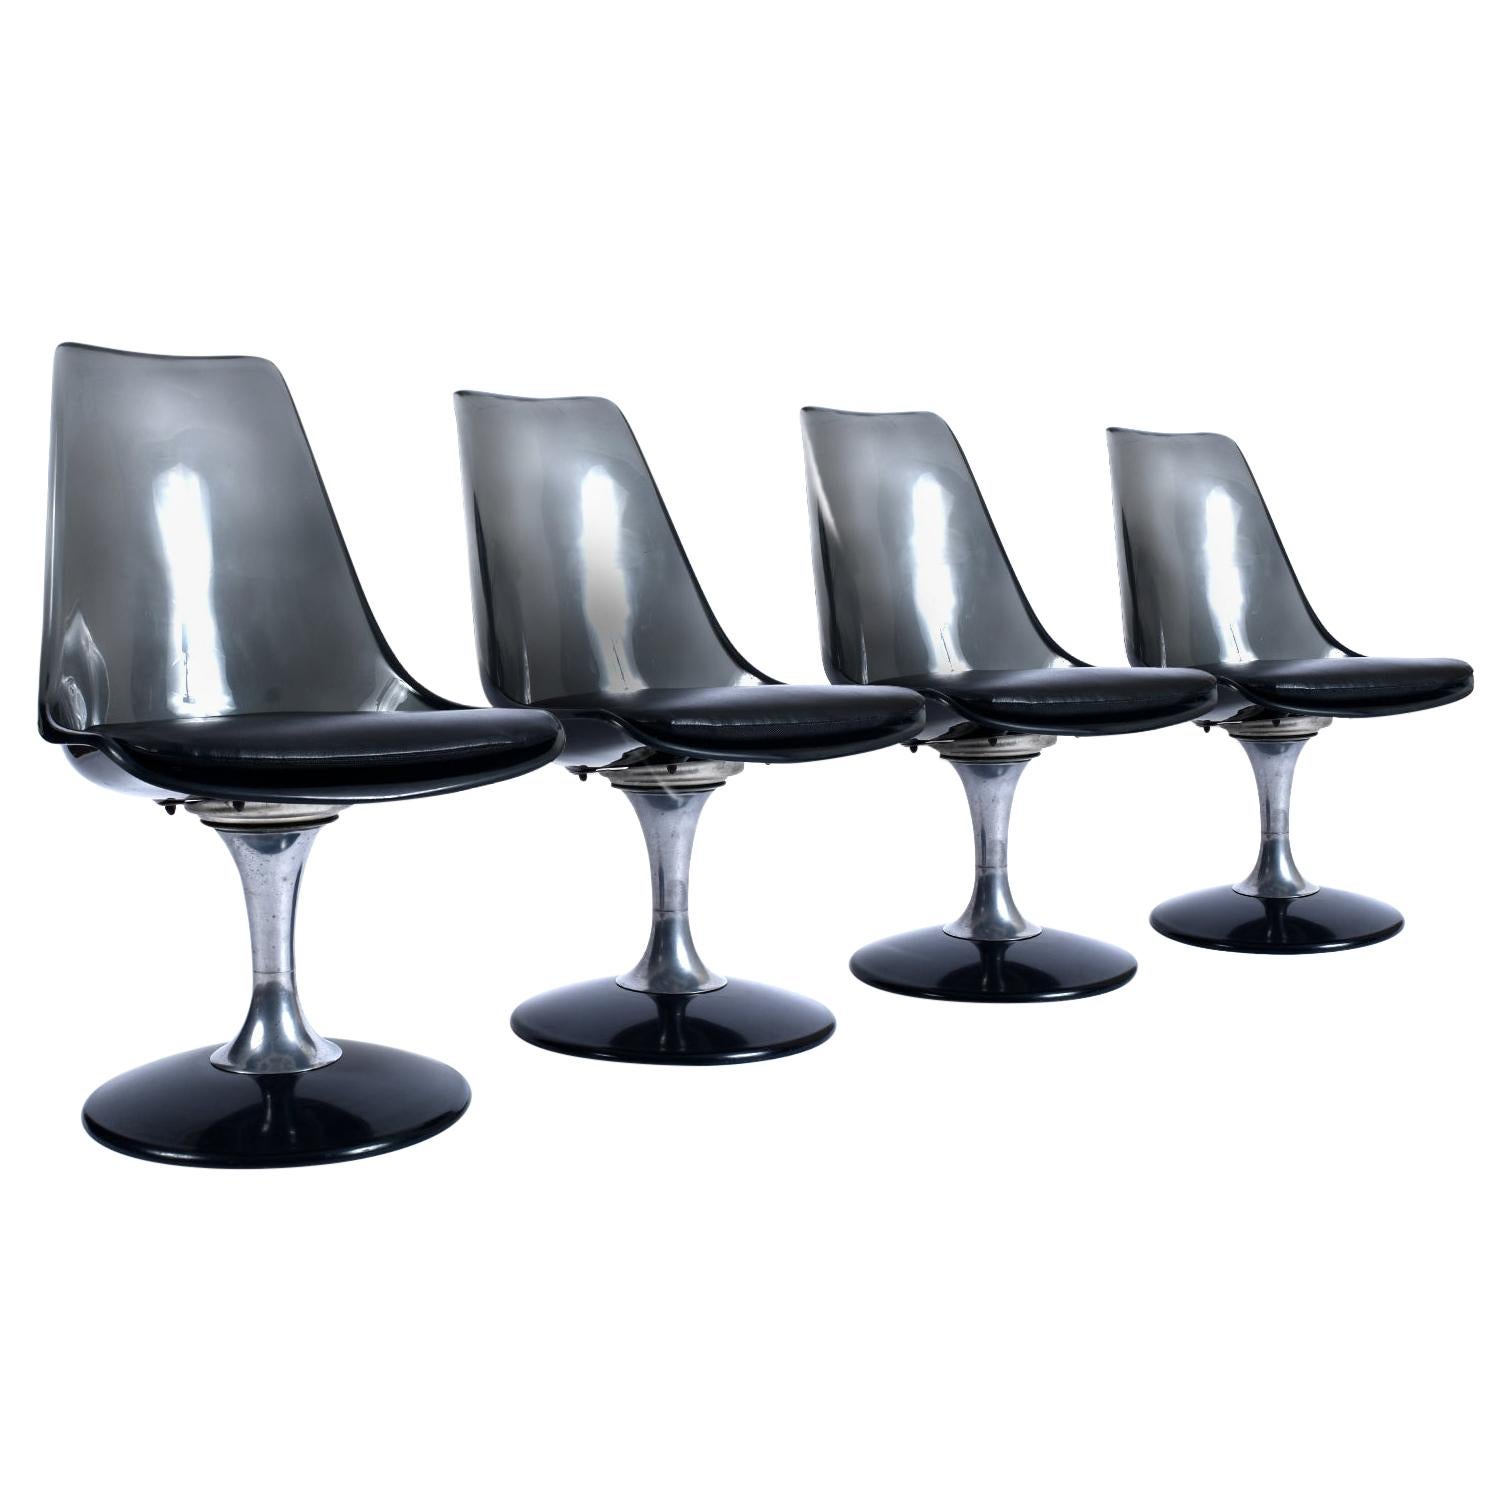 Smoked Lucite Acrylic Tulip Base Swivel Chairs by Chromcraft